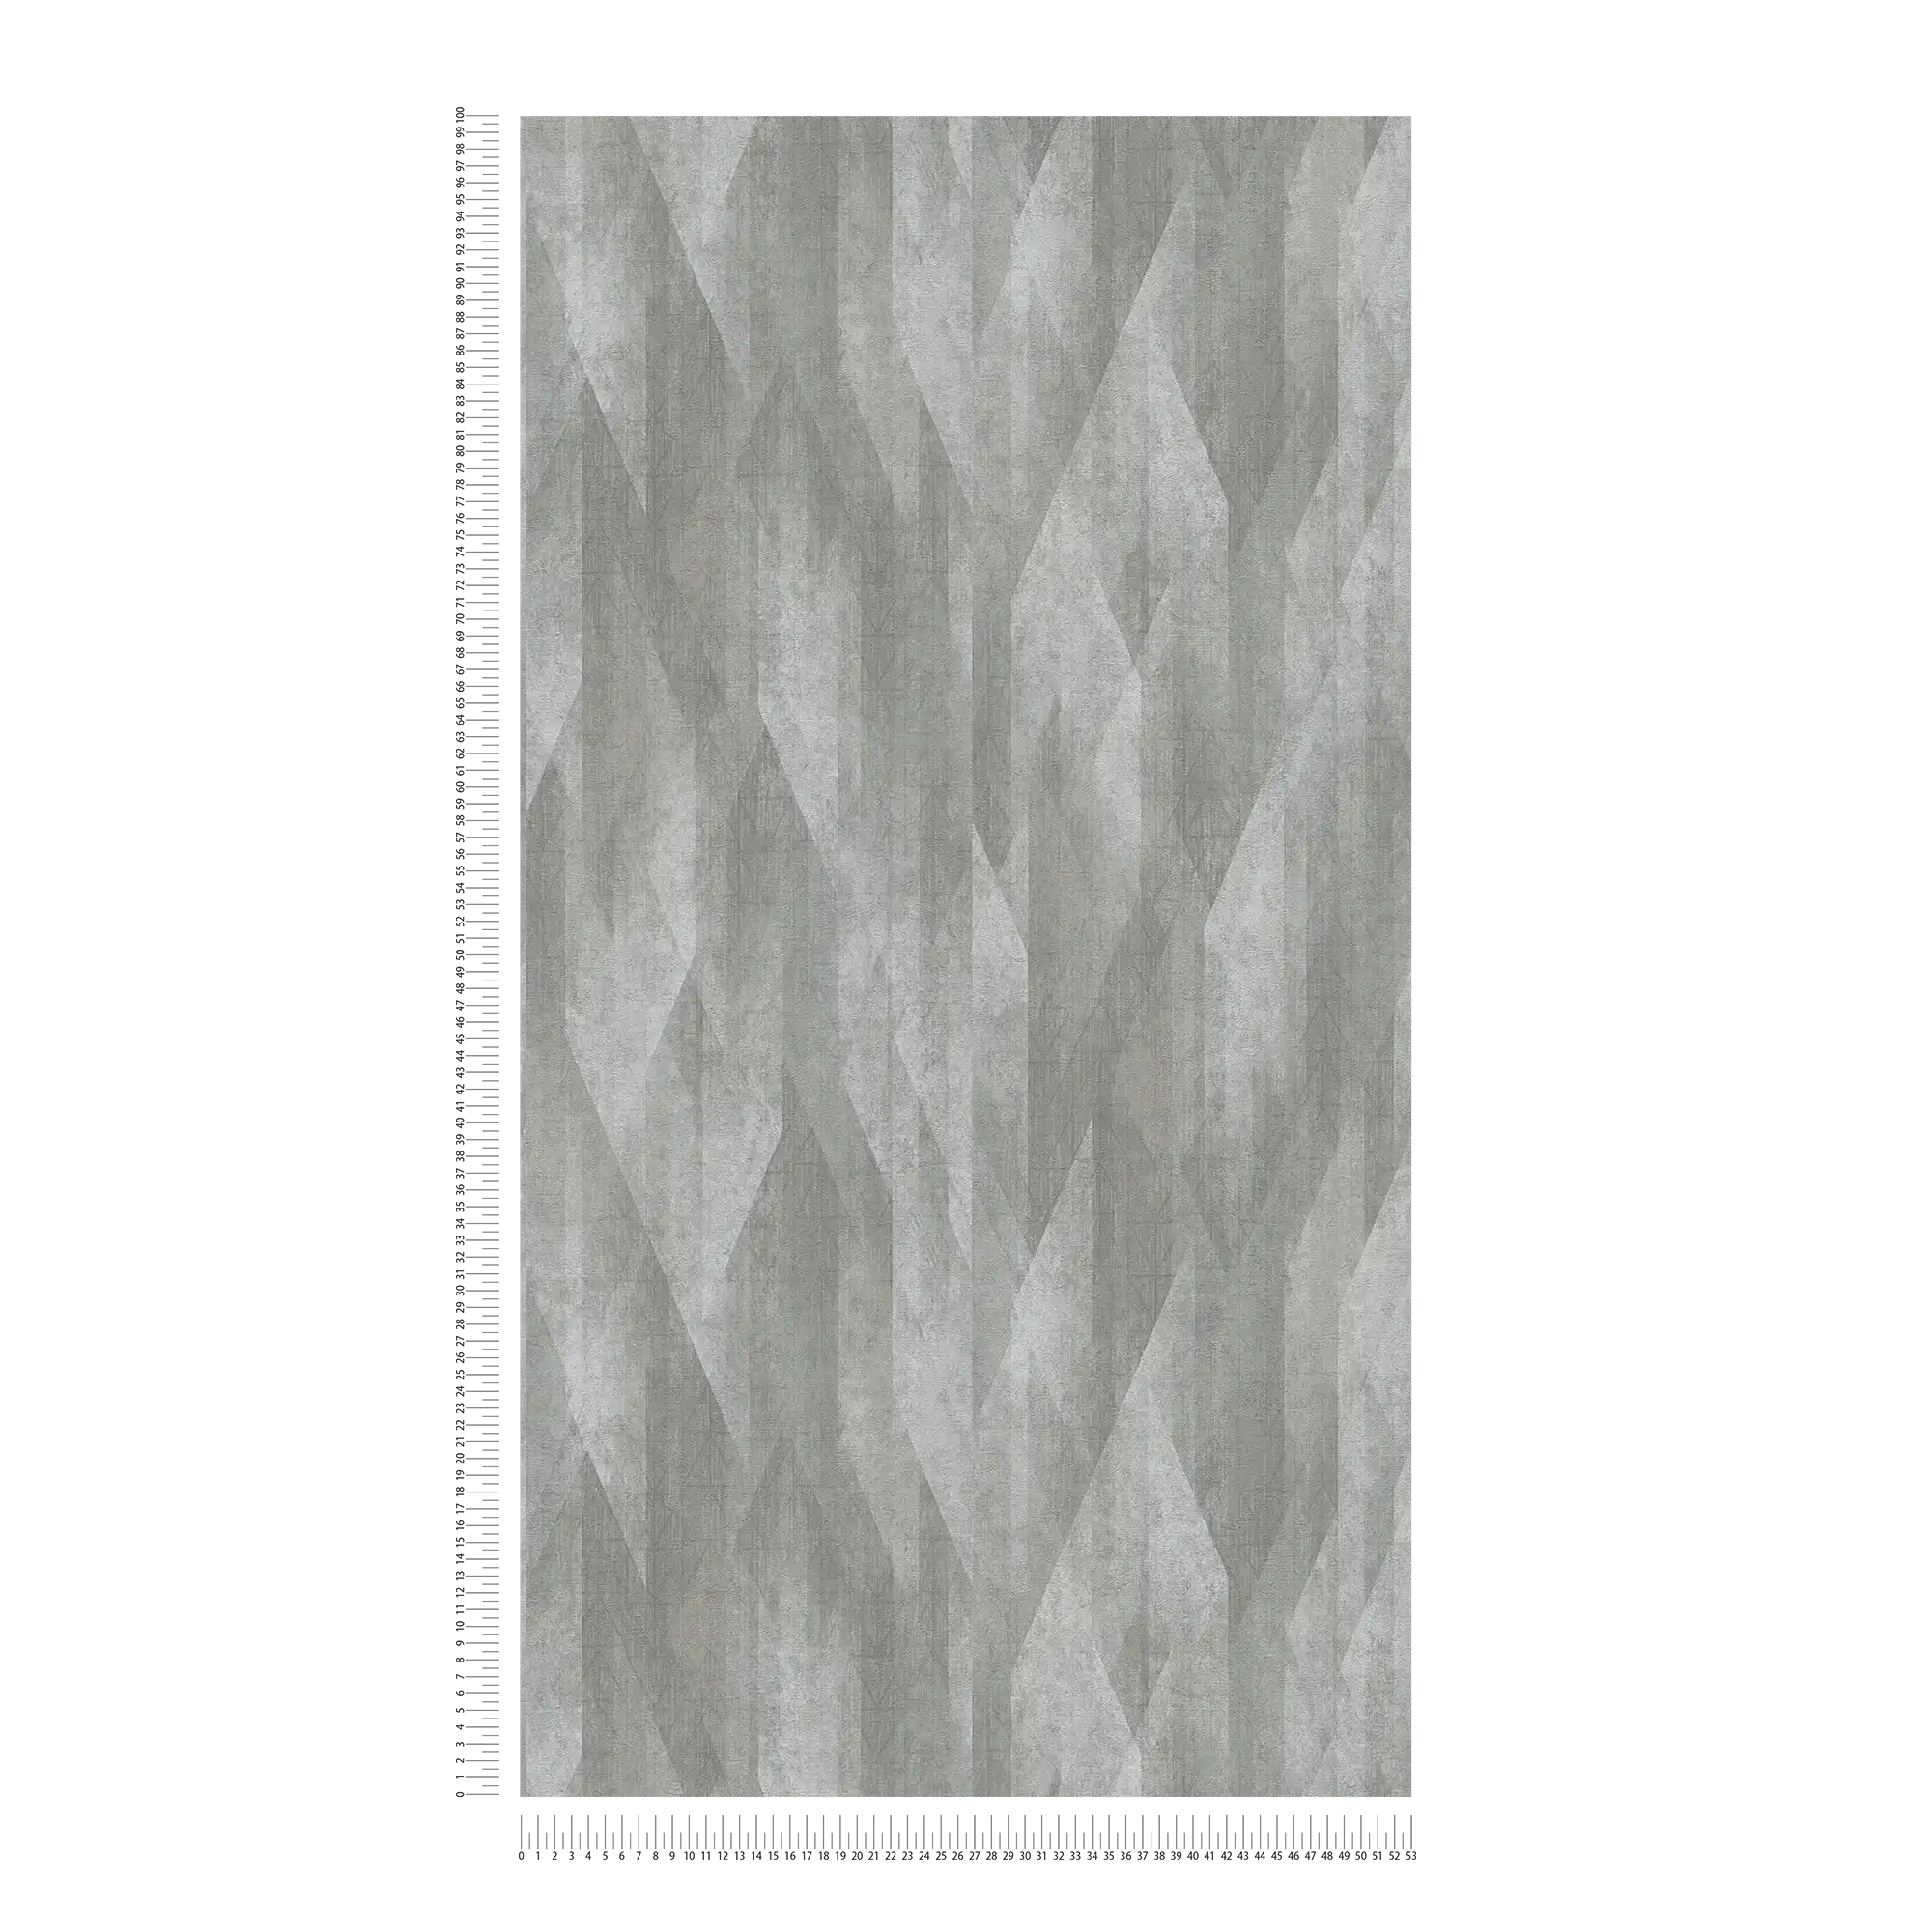             Non-woven wallpaper with graphic diamond design - grey
        